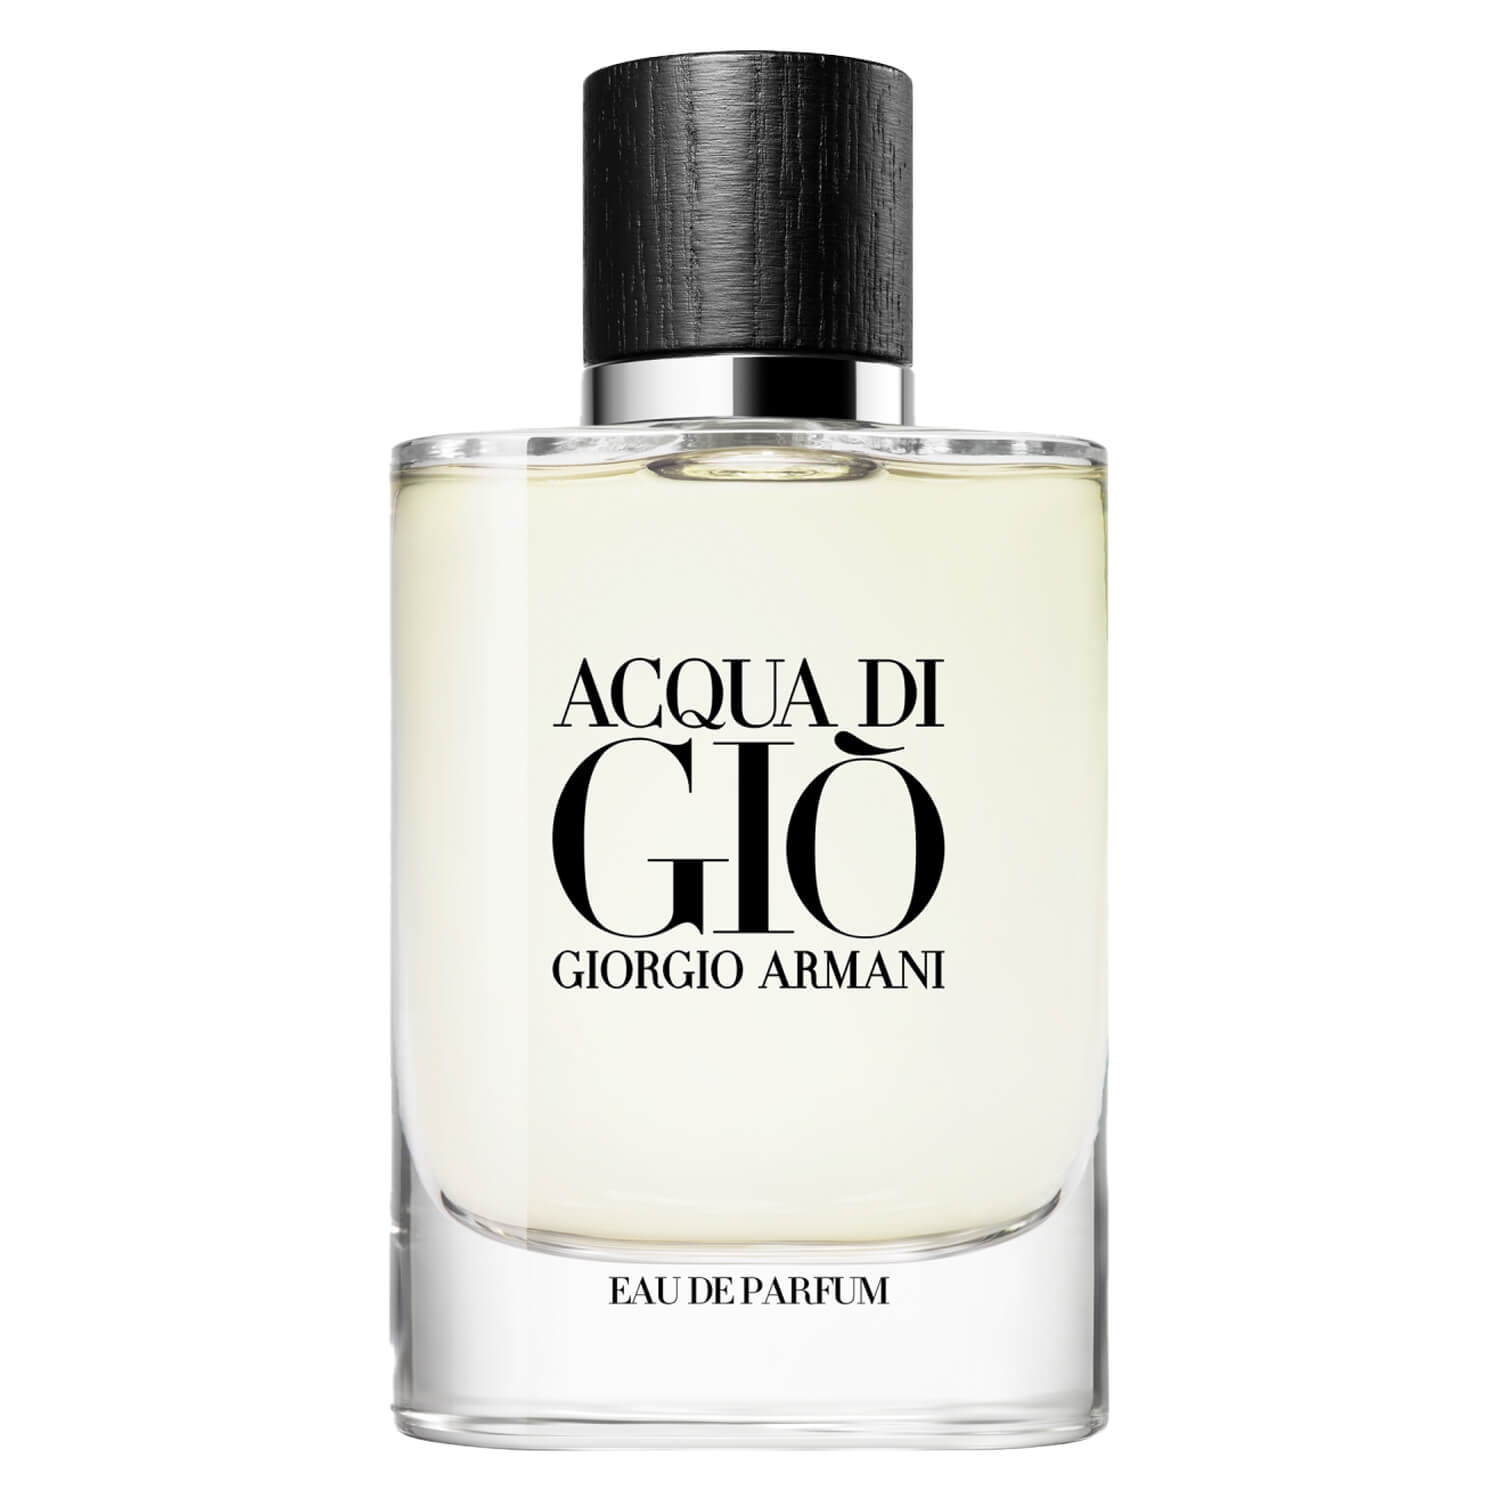 Produktbild von Acqua di Giò - Eau de Parfum